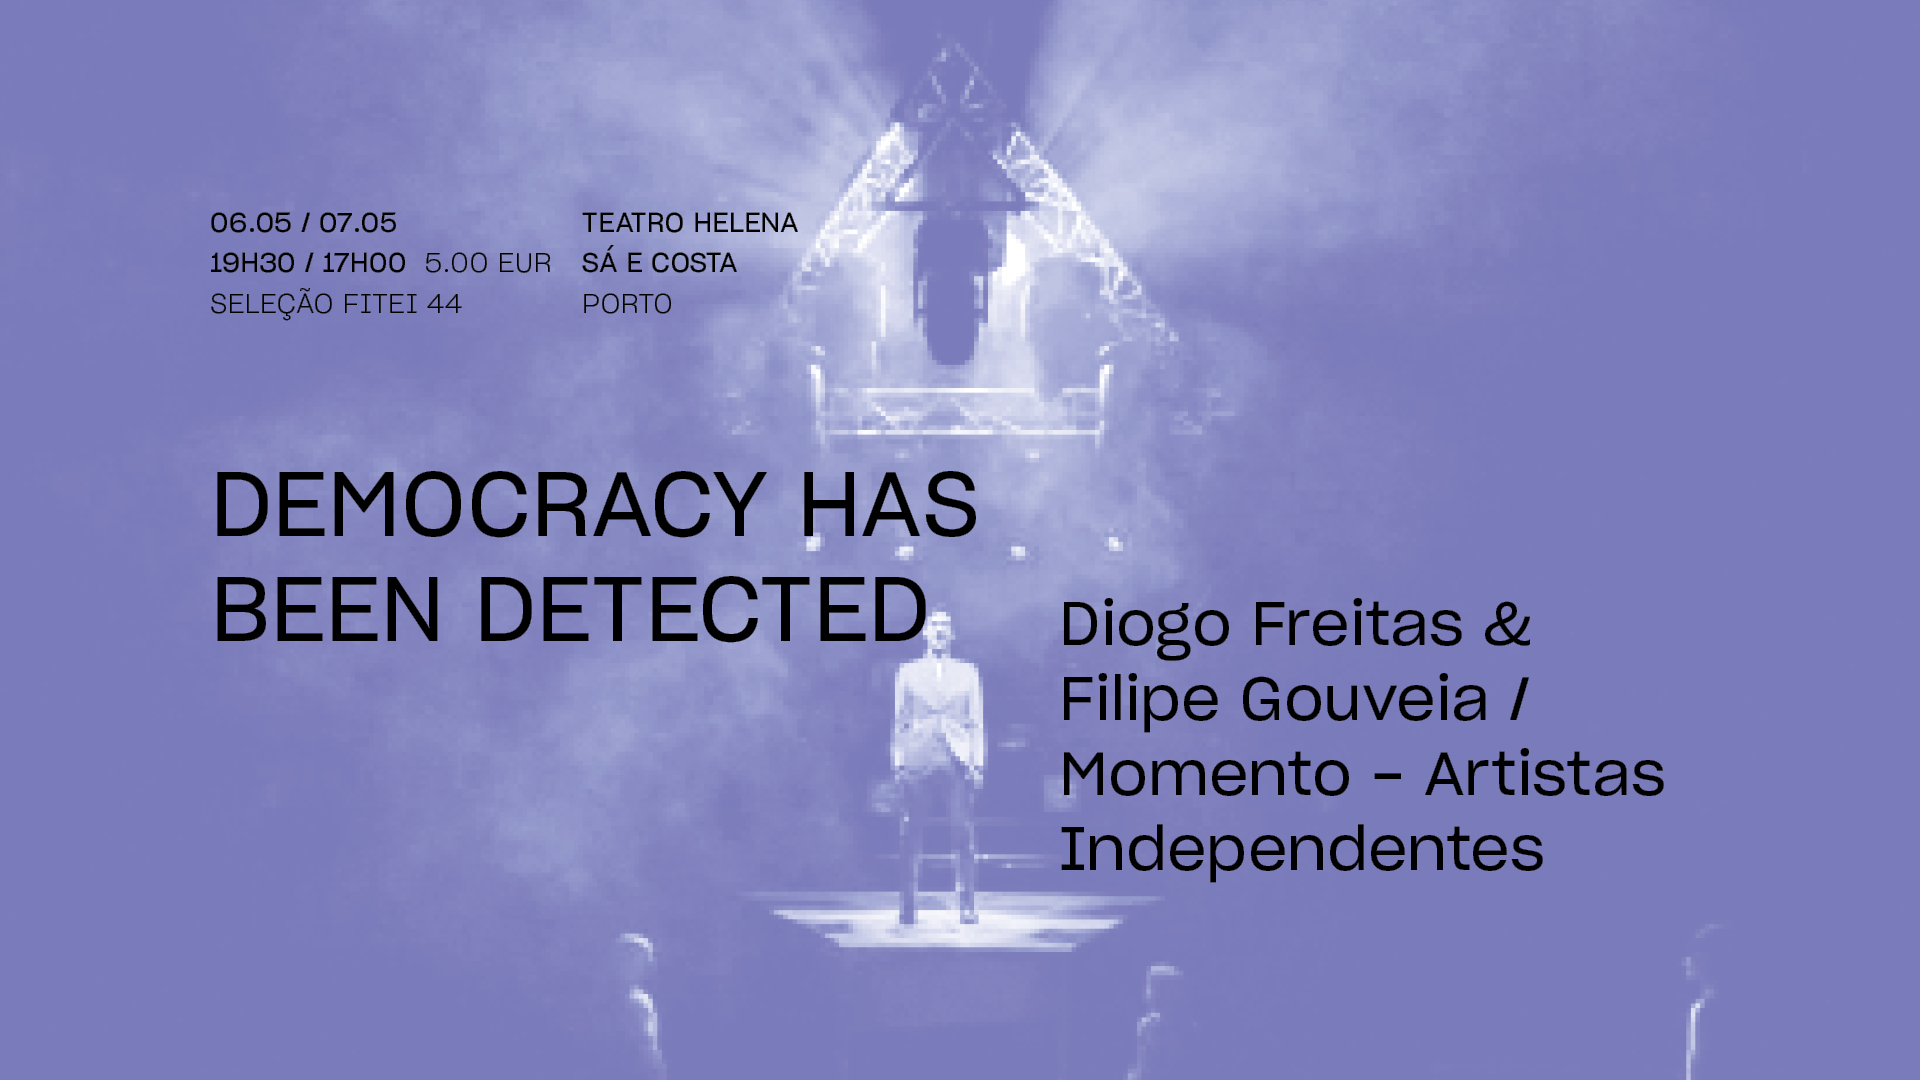 Democracy has been detected / DIOGO FREITAS & FILIPE GOUVEIA / MOMENTO - ARTISTAS INDEPENDENTES